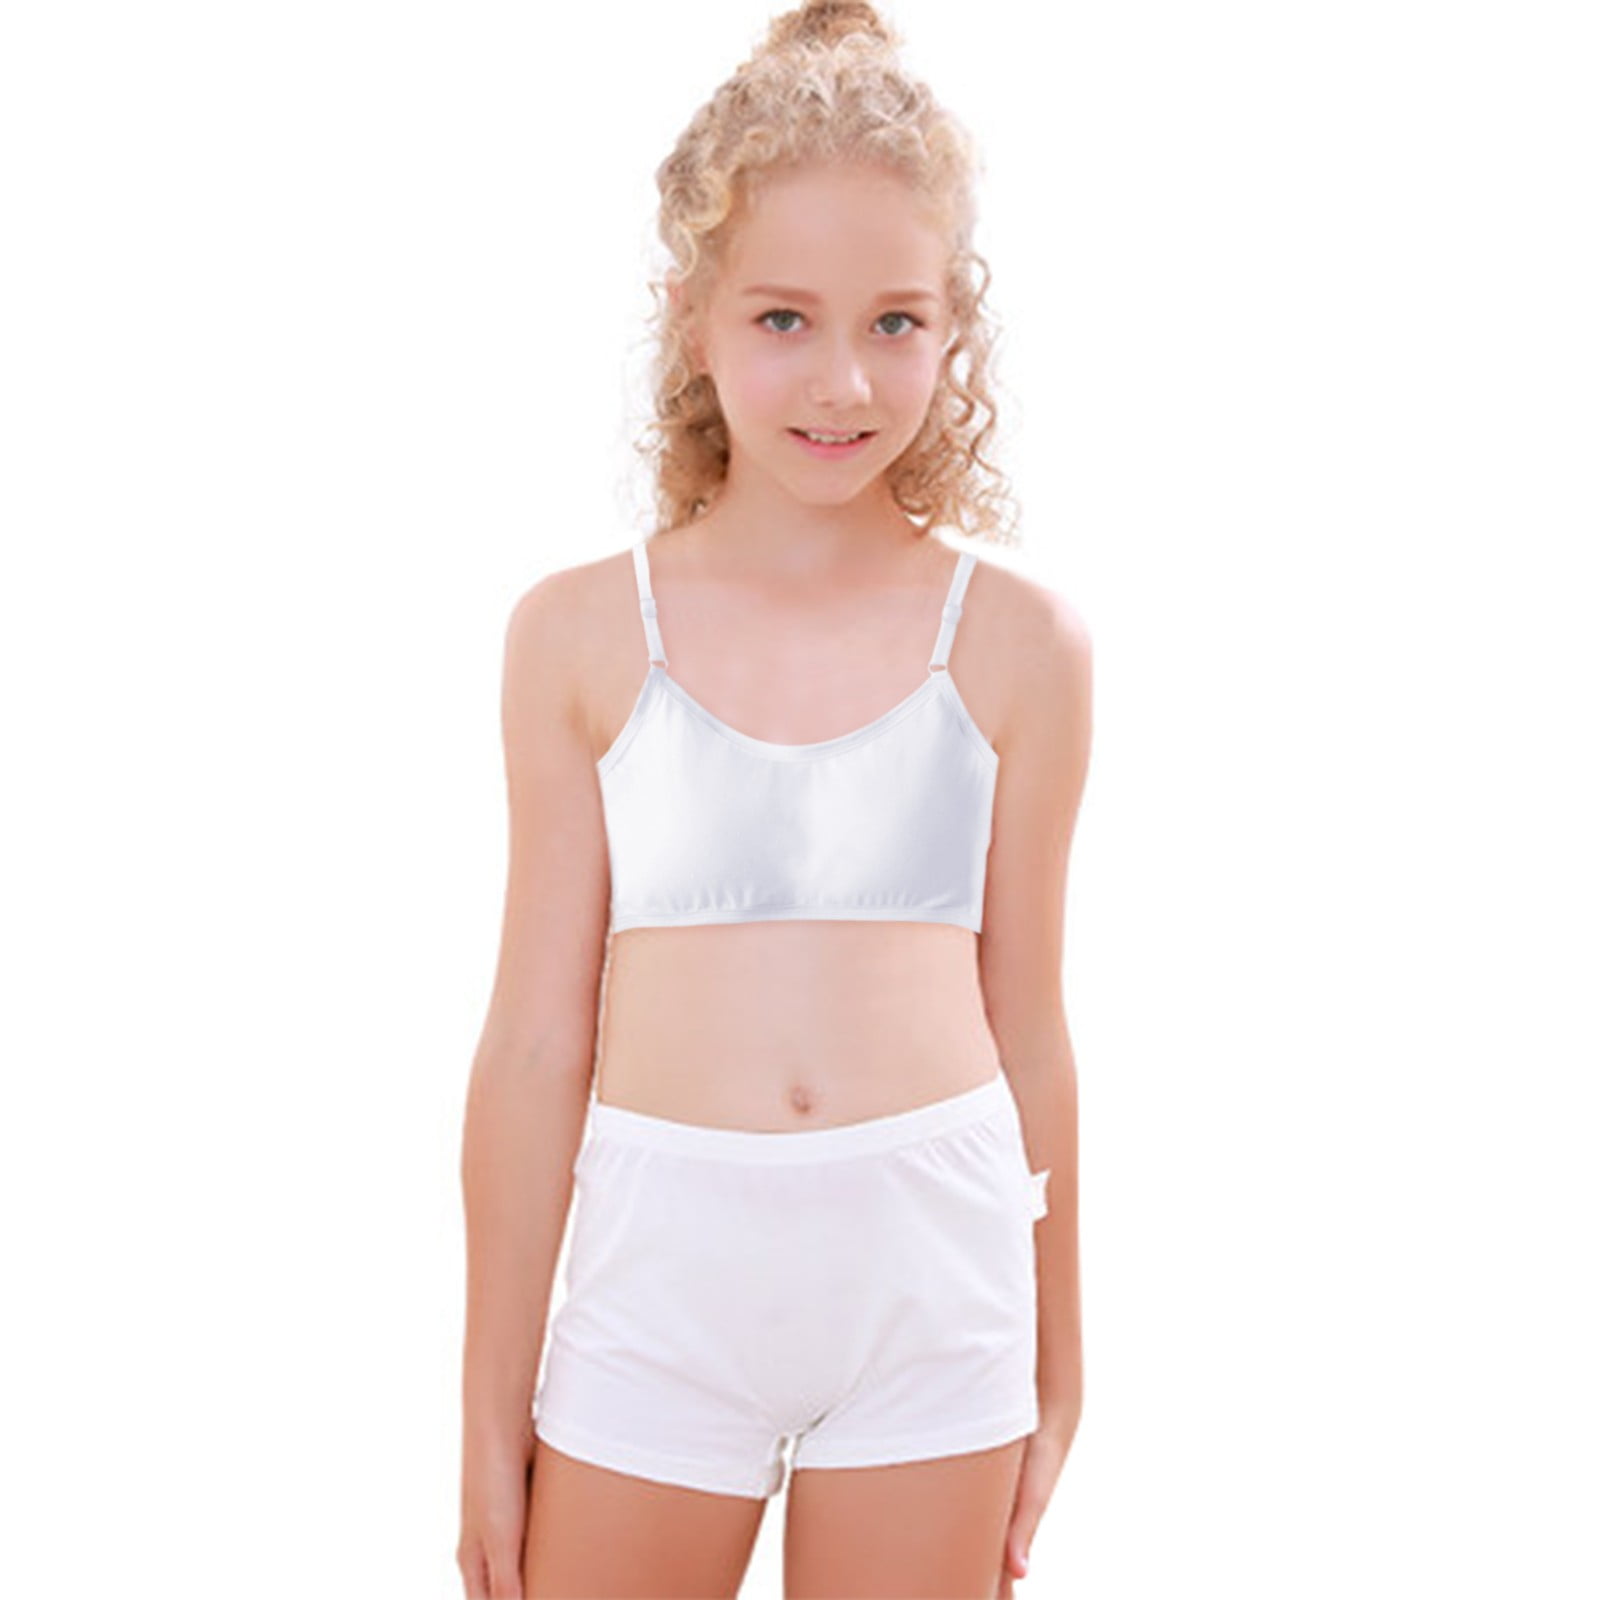 TIMIFIS Training Bras for girls 10-12 12-14 years old, Youth Girls Running Sports  Bras Teen Bralettes Adjustable Brassiere Underwear 